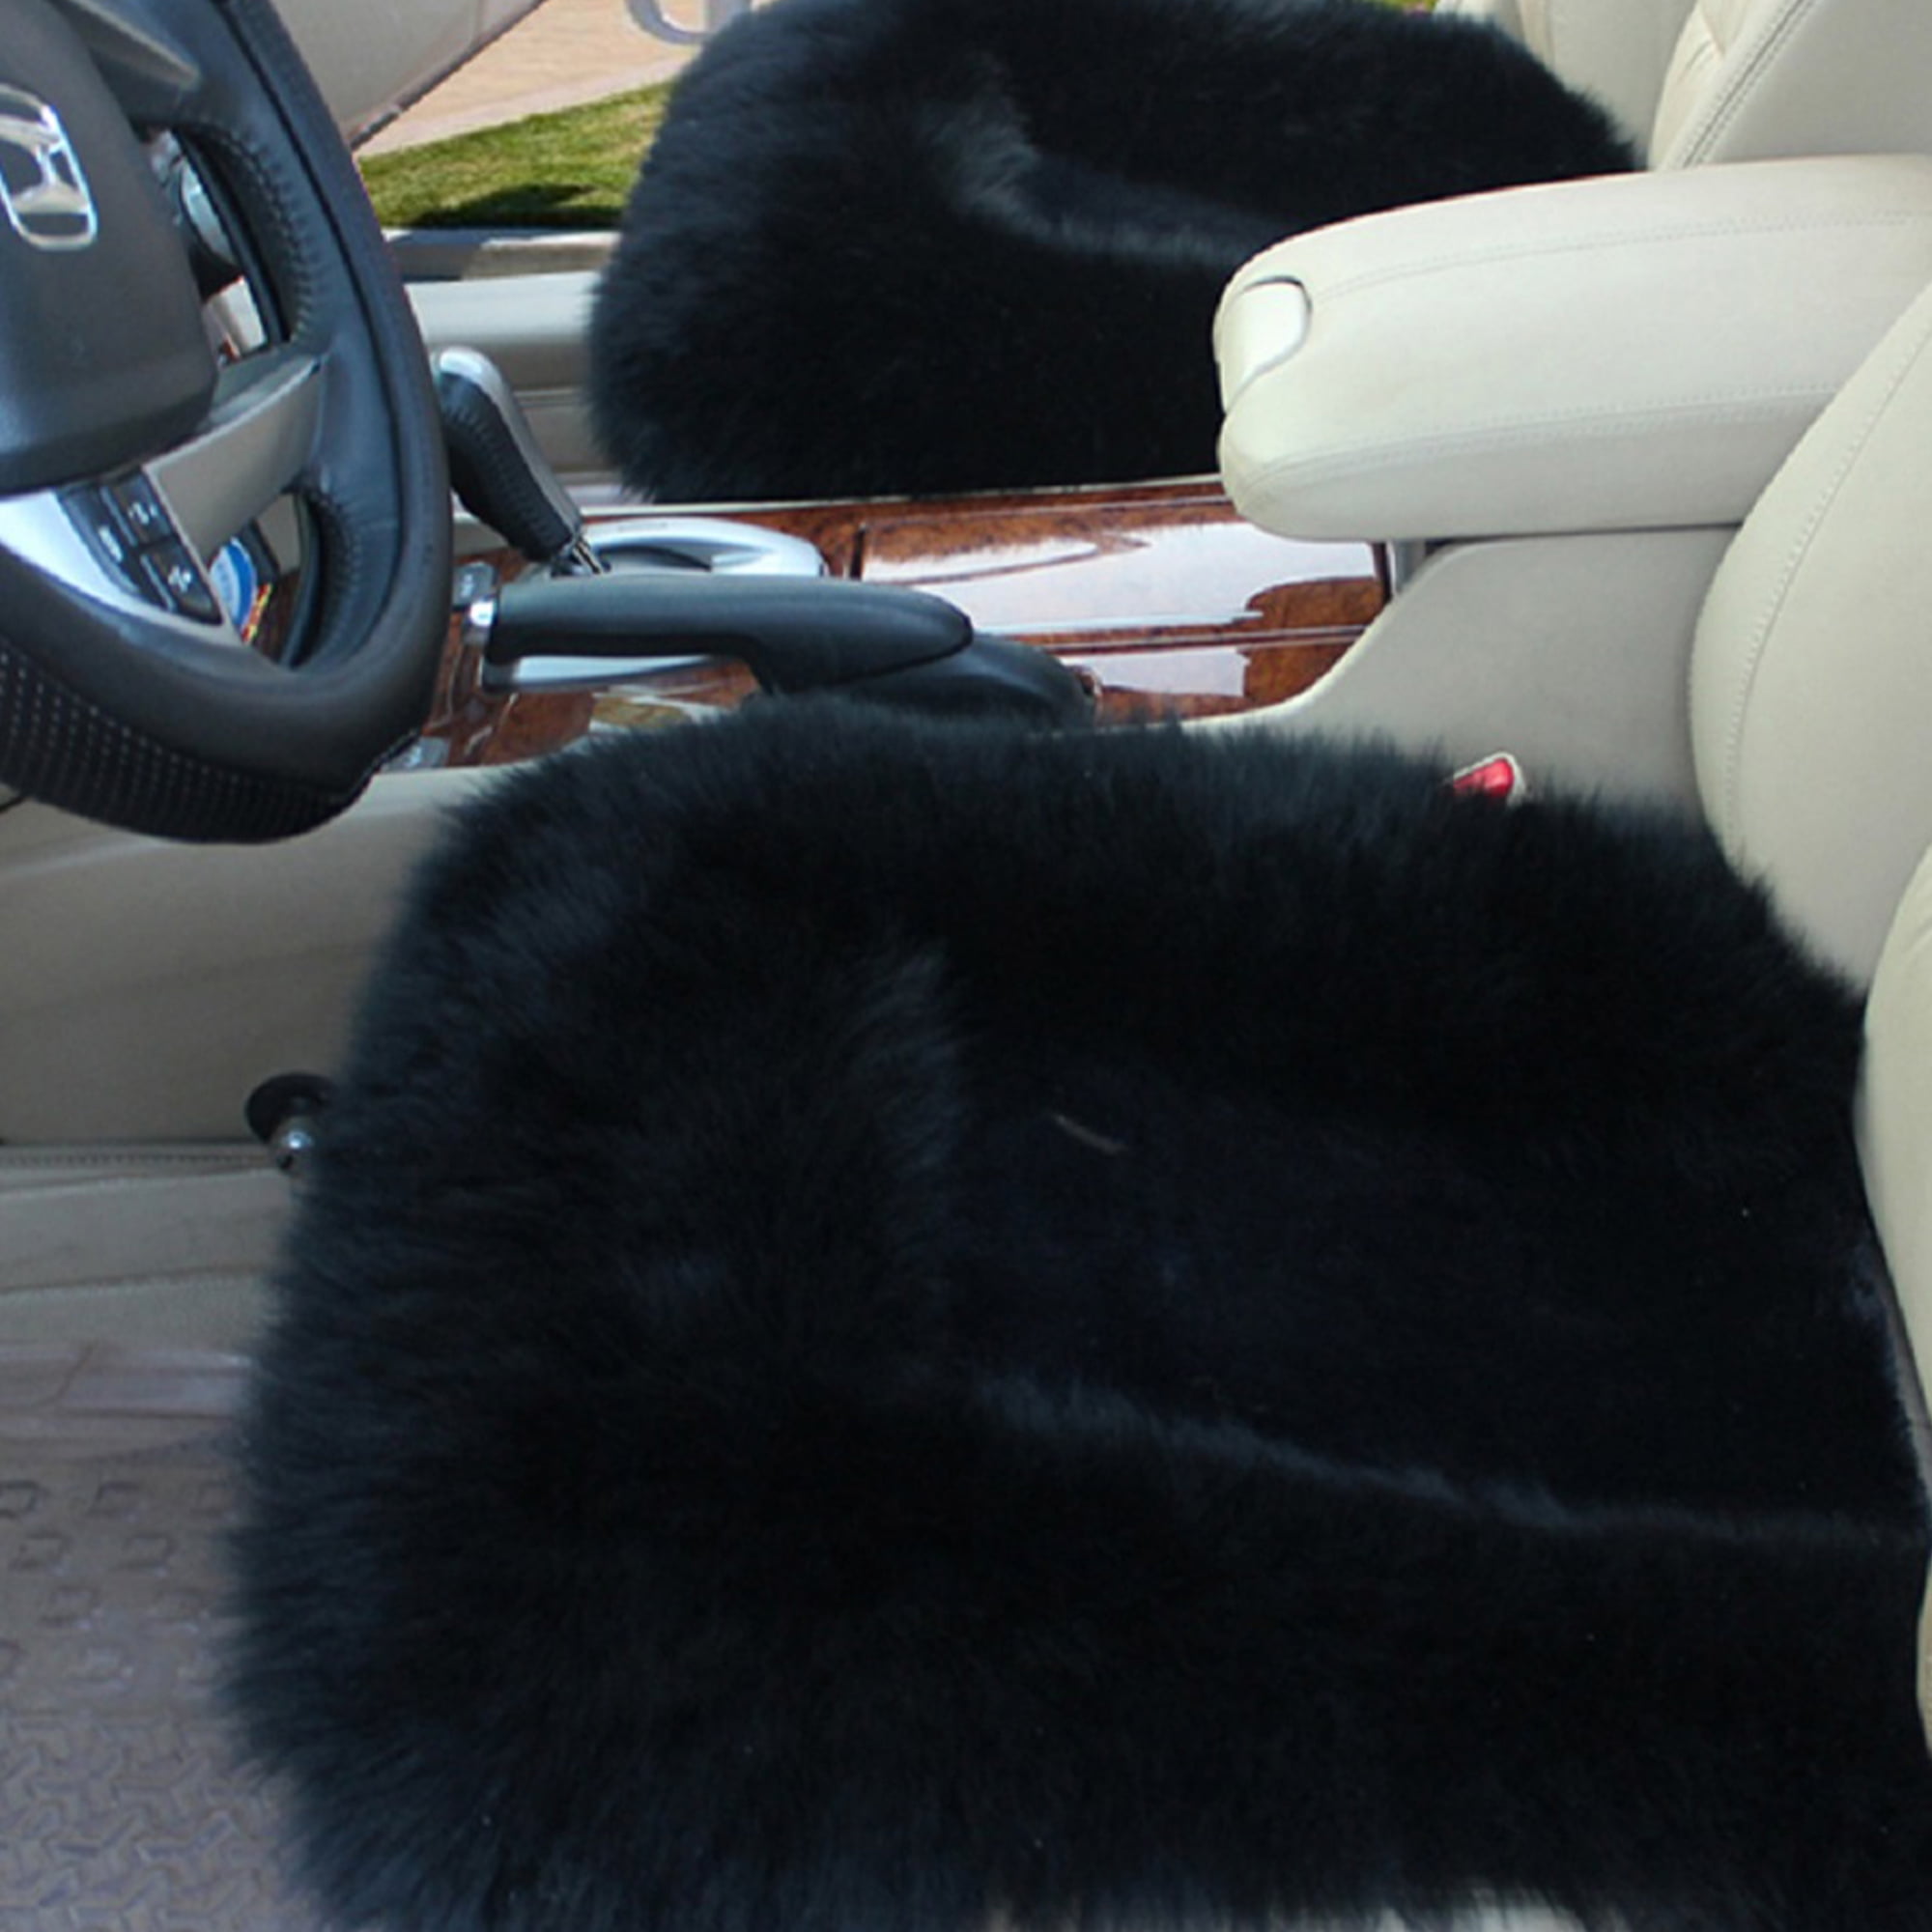 Universal Fluffy Faux Fur Single Seat Plush Car Cushion Thick Wool